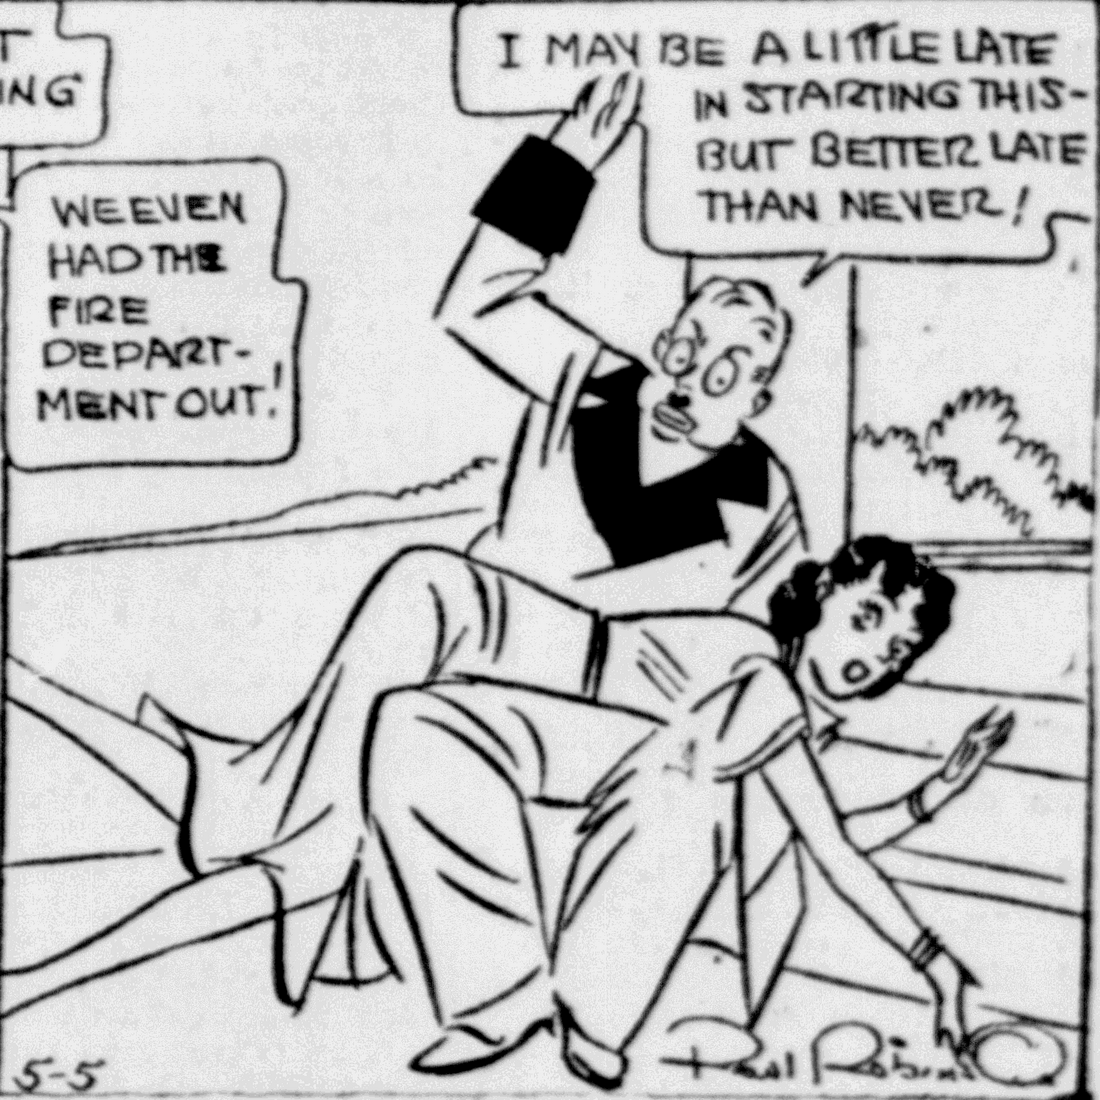 etta kett spanking panel from 05/05/1934